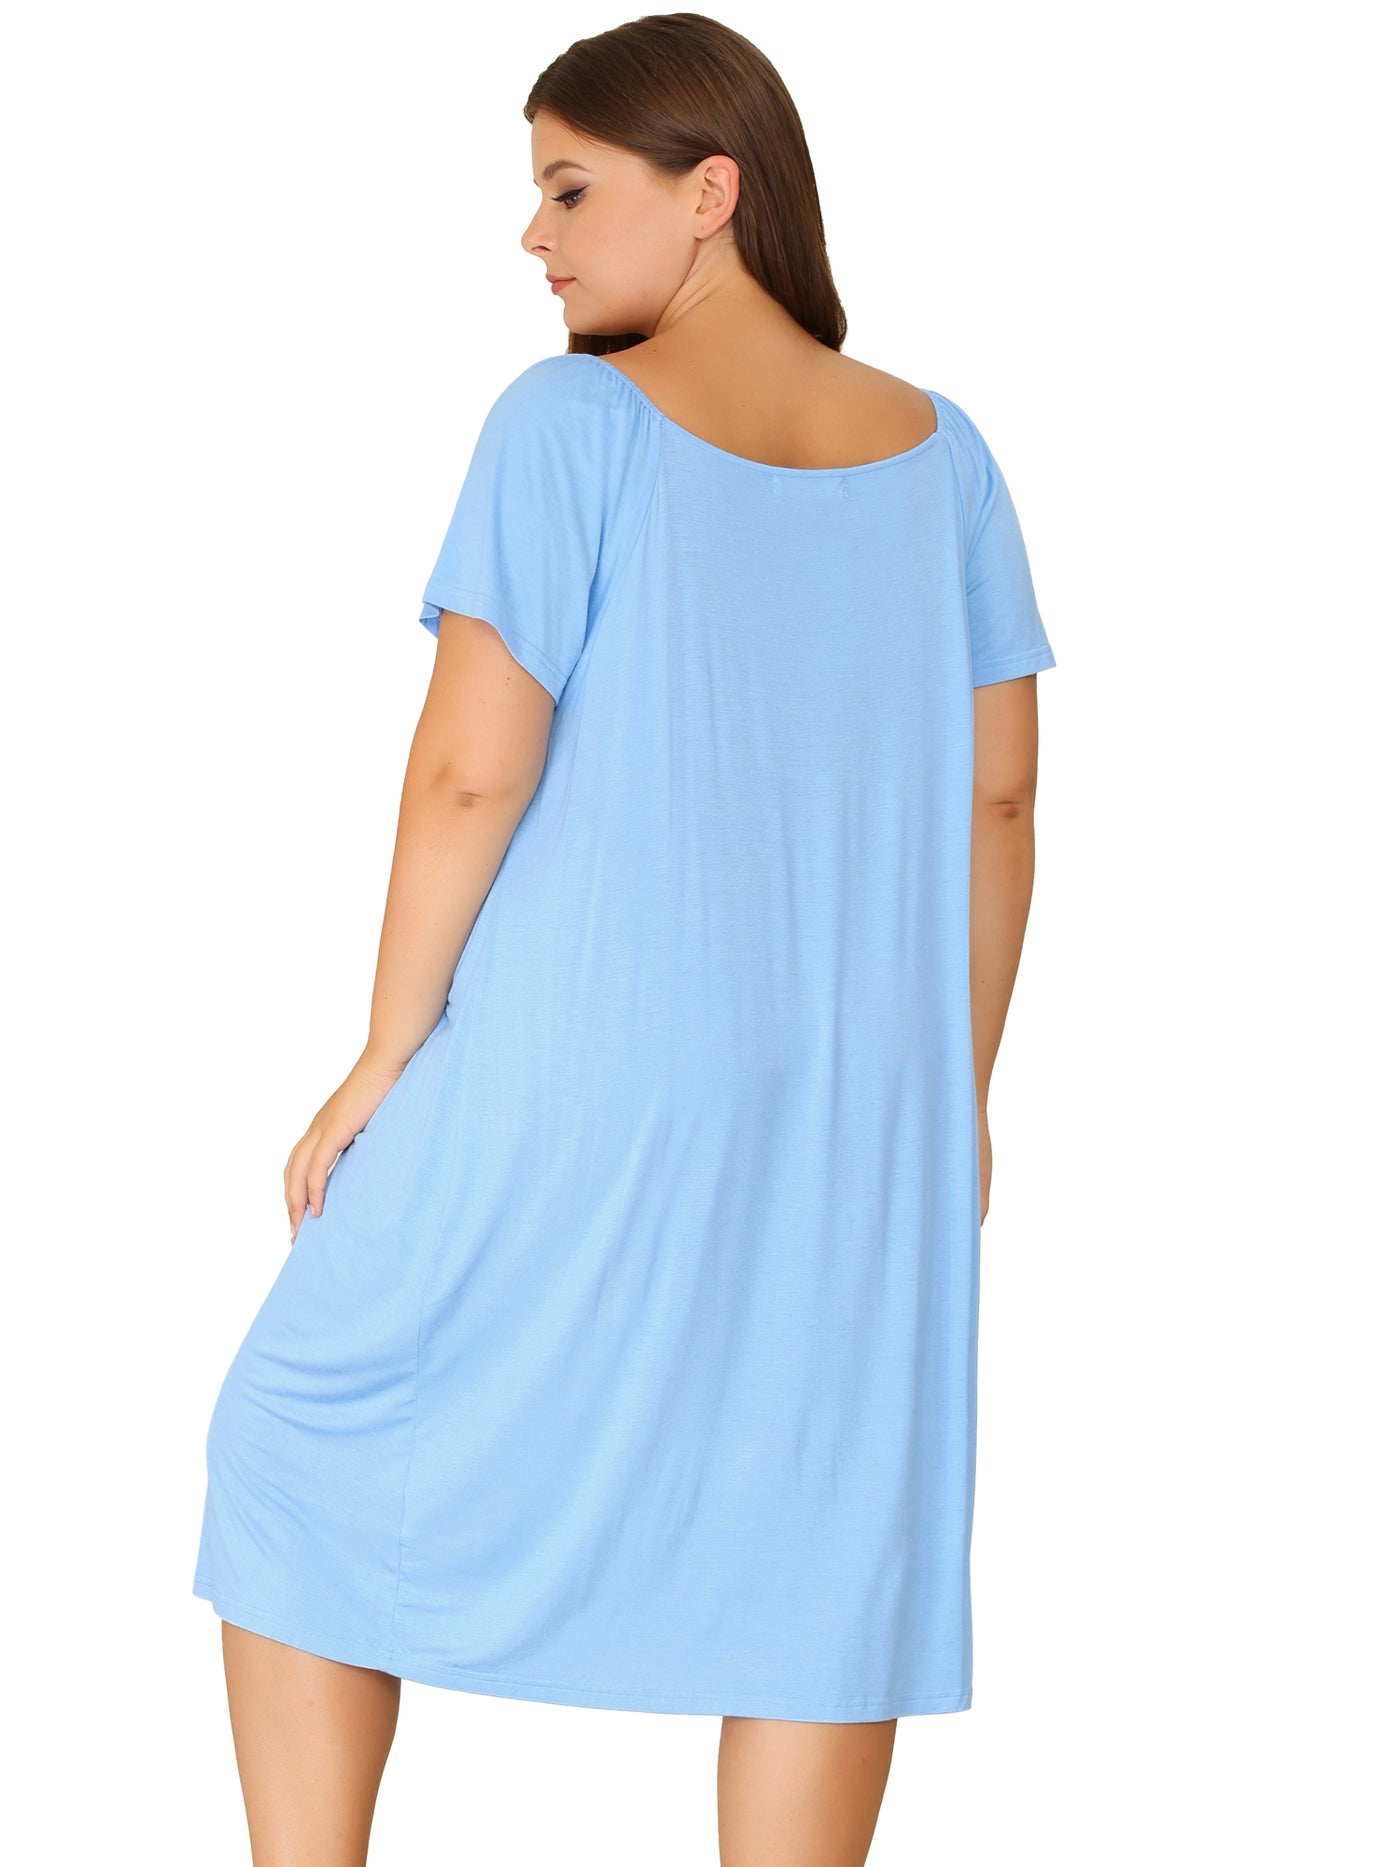 Bublédon Women's Plus Size Sleep Dress Knit Sweetheart Neck Short Sleeve Nightdress